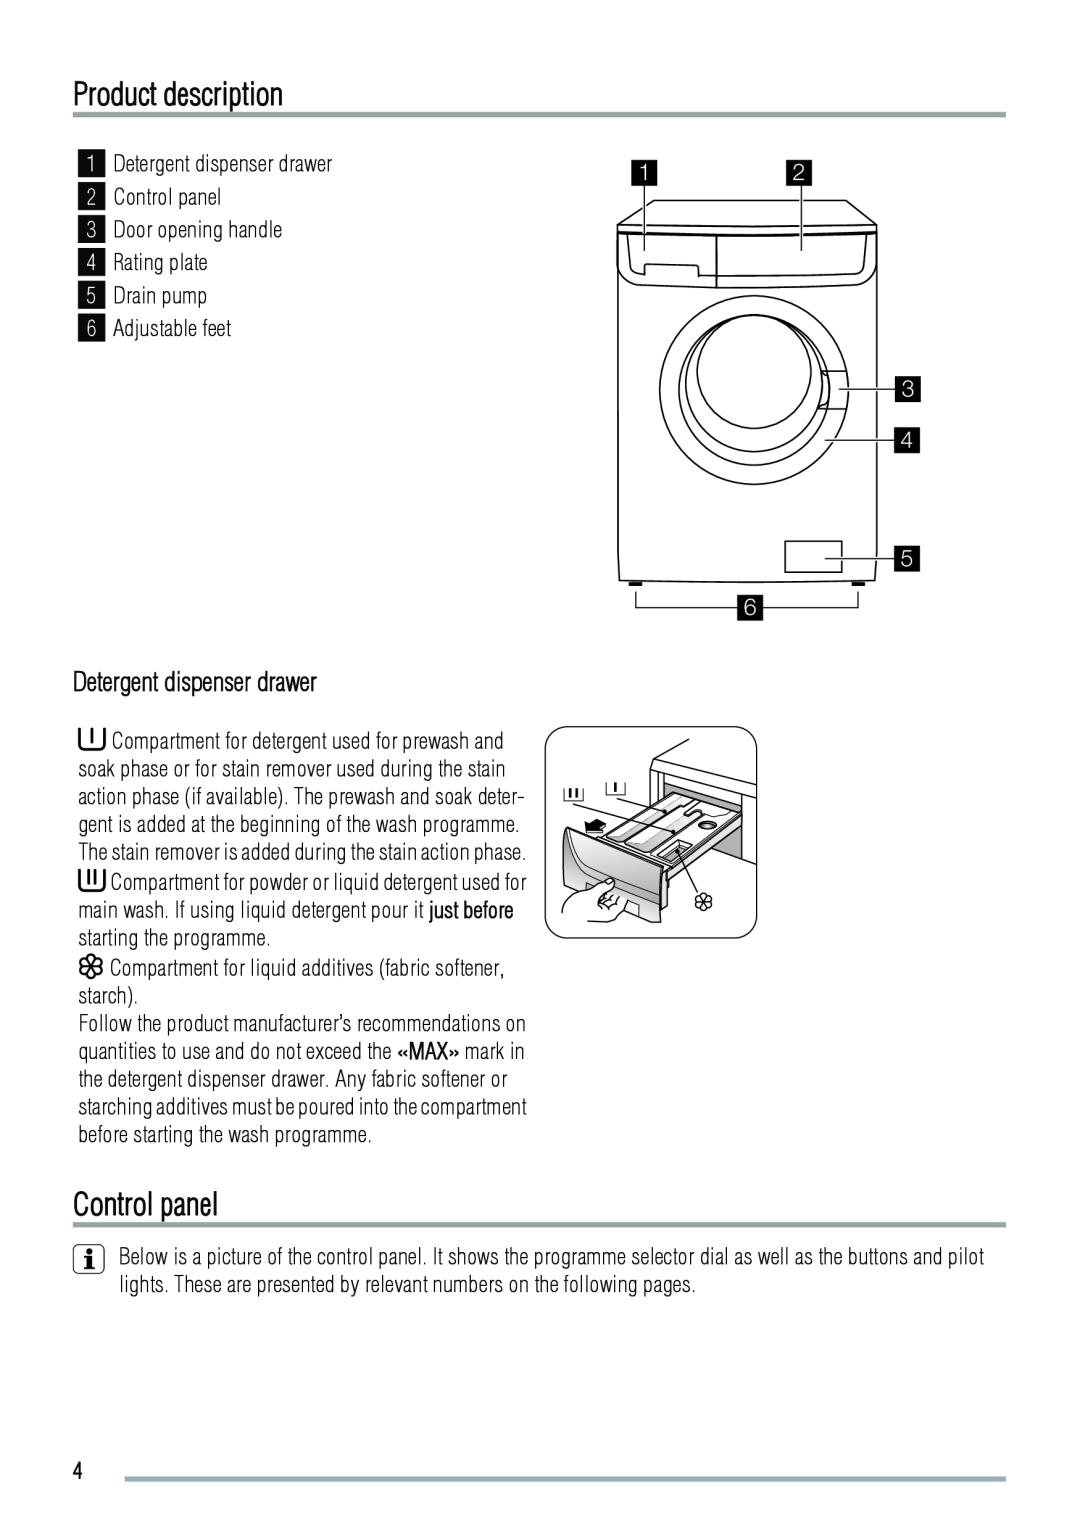 Zanussi 192994960-00-202009 user manual Product description, Control panel, Detergent dispenser drawer, Door opening handle 